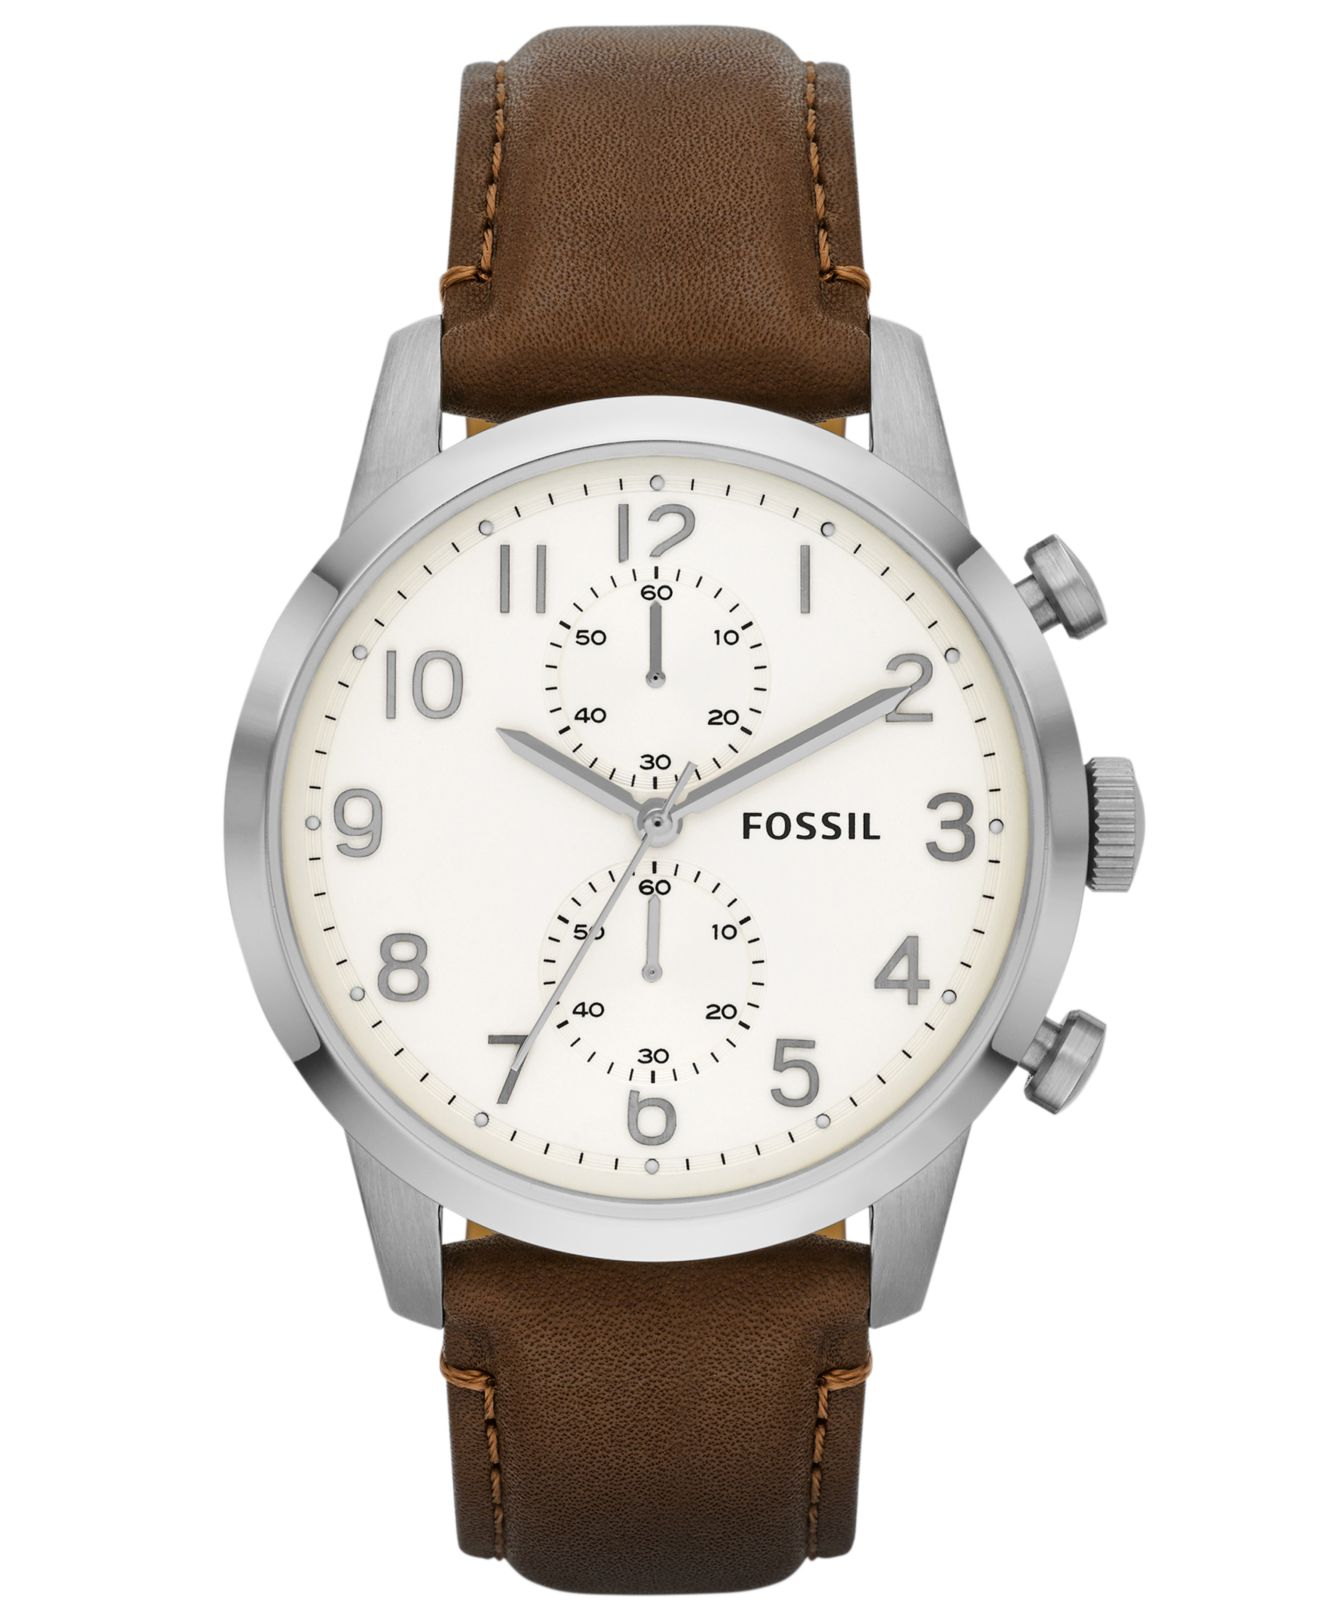 Lyst - Fossil Men's Townsman Brown Leather Strap Watch 44mm Fs4872 in